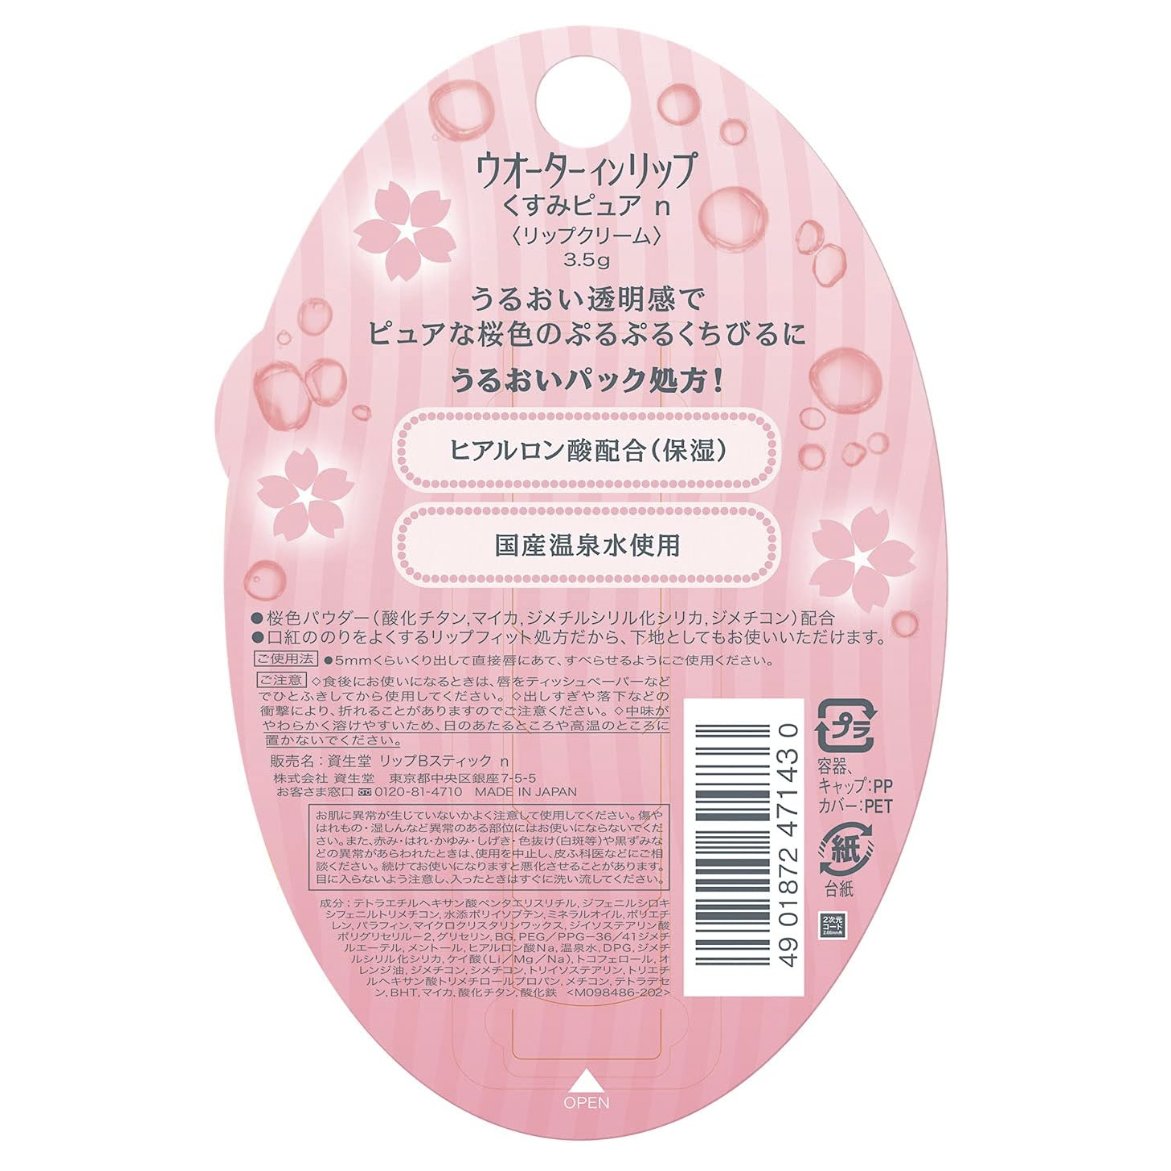 SHISEIDO 資生堂WATERIN 溫泉水潤唇膏透明淡櫻花色